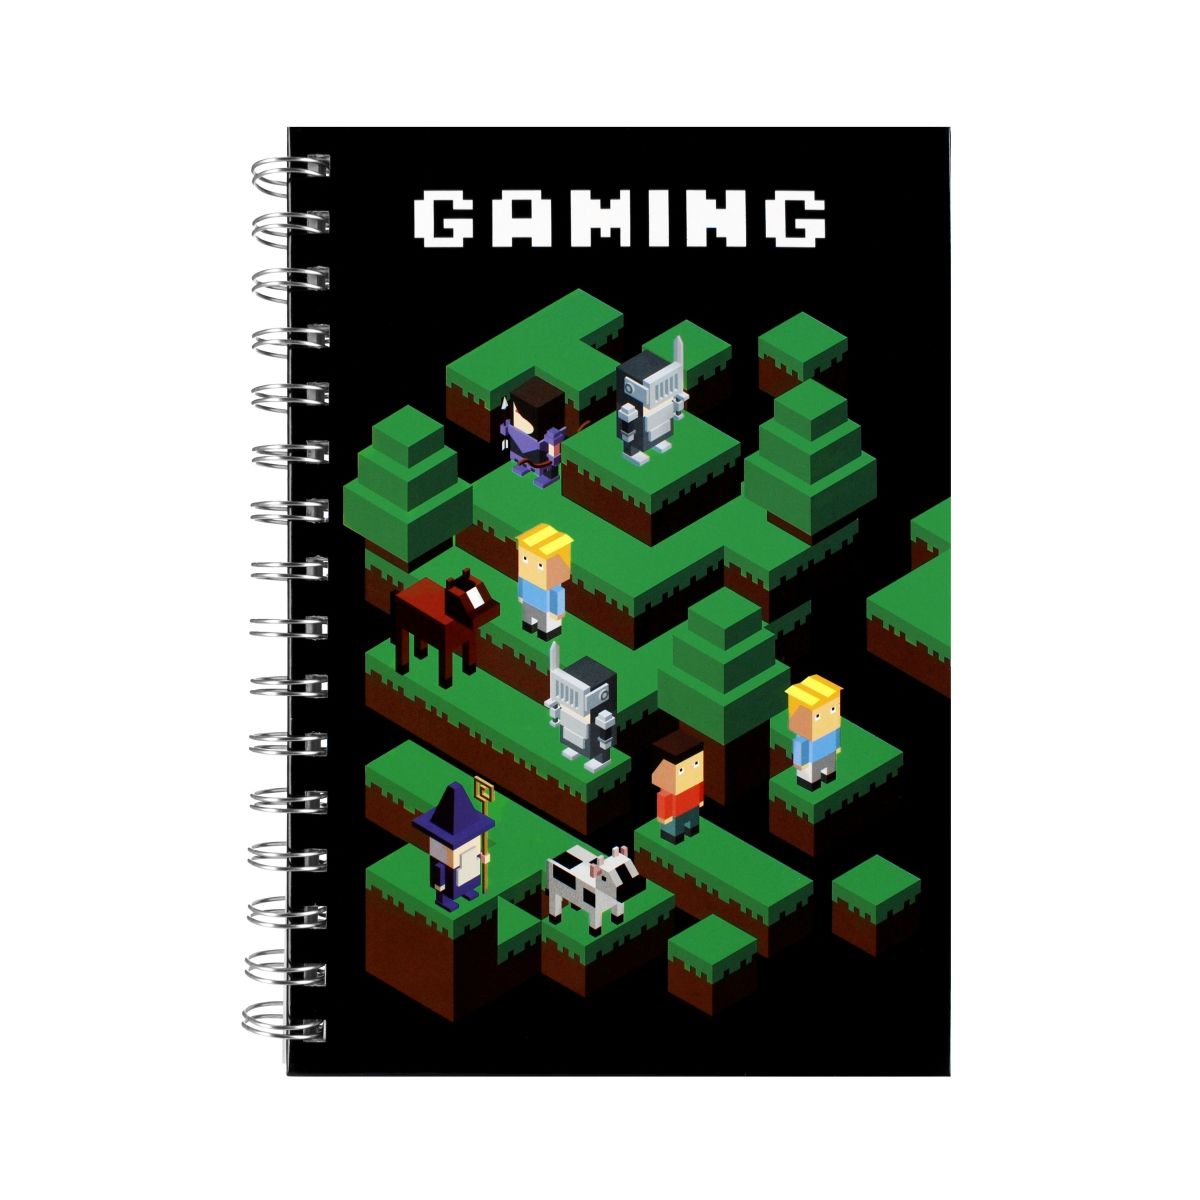 Notes Pixel  Game A5 Starpak (507481)